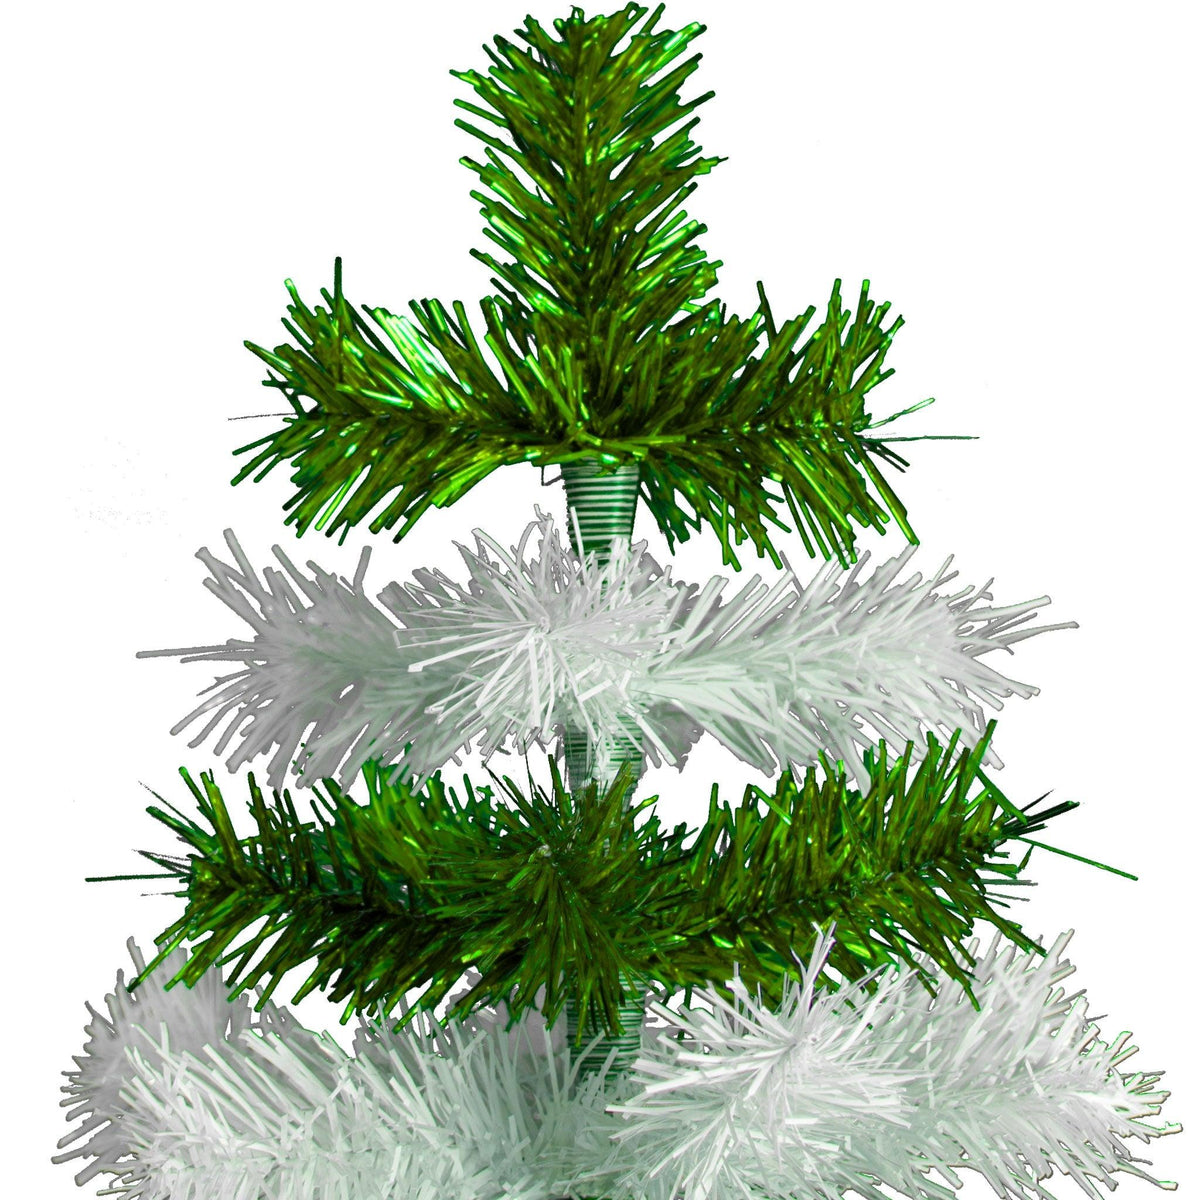 Green & White Layered Tinsel Christmas Trees on sale at leedisplay.com